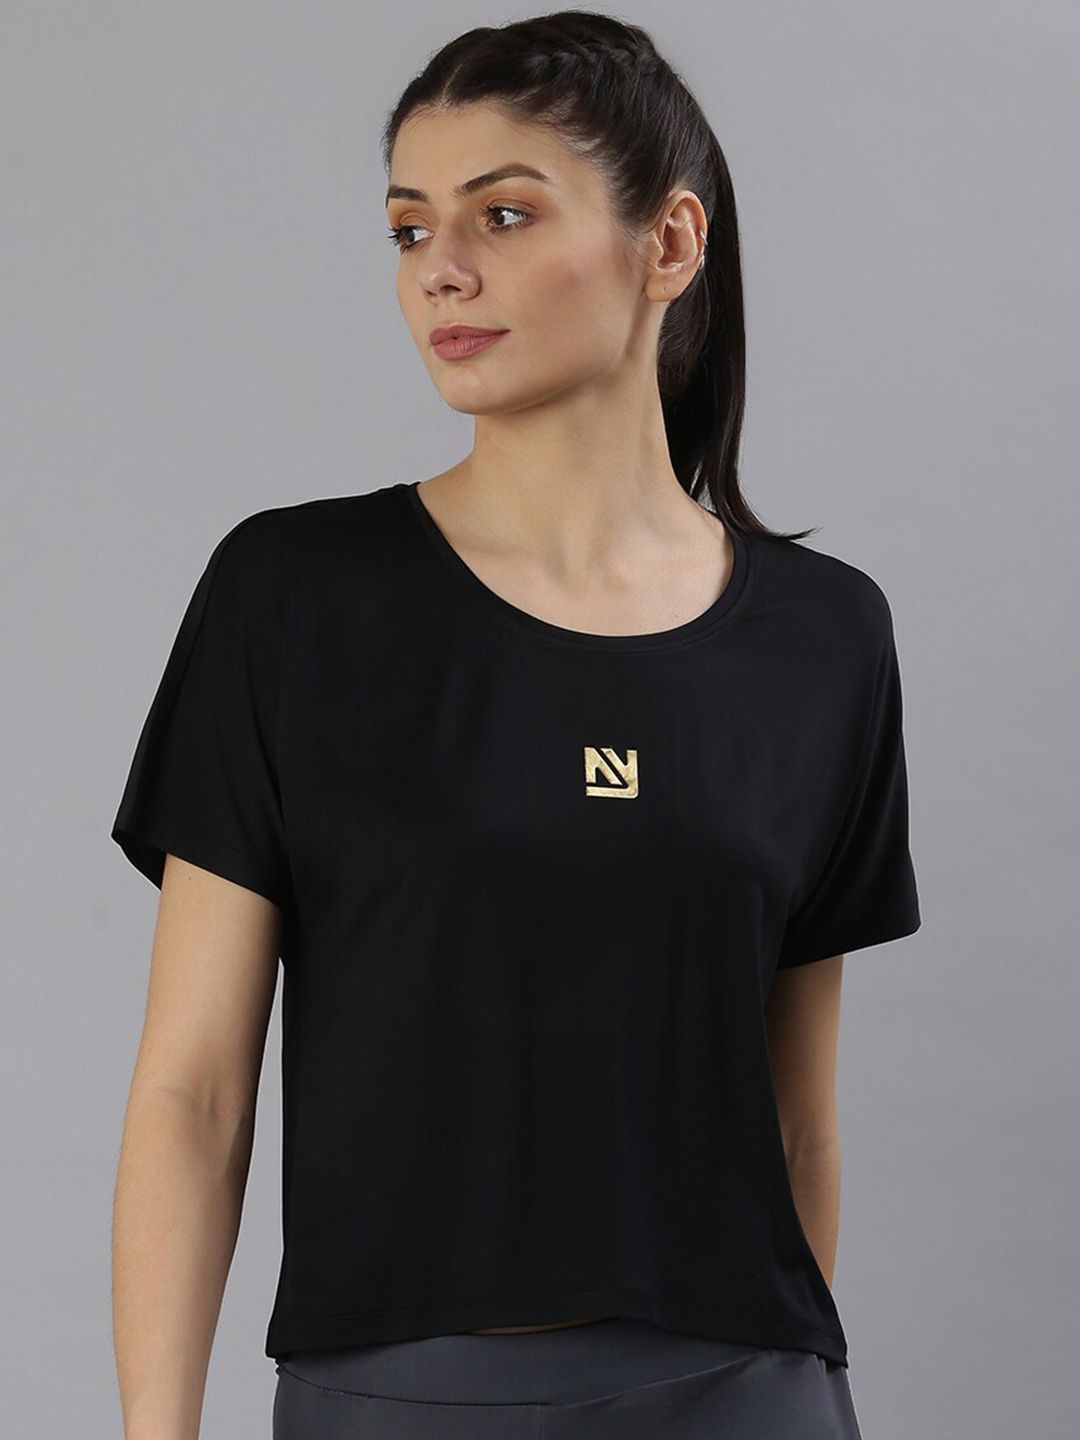 MKH Women Black Typography Dri-FIT T-shirt Price in India